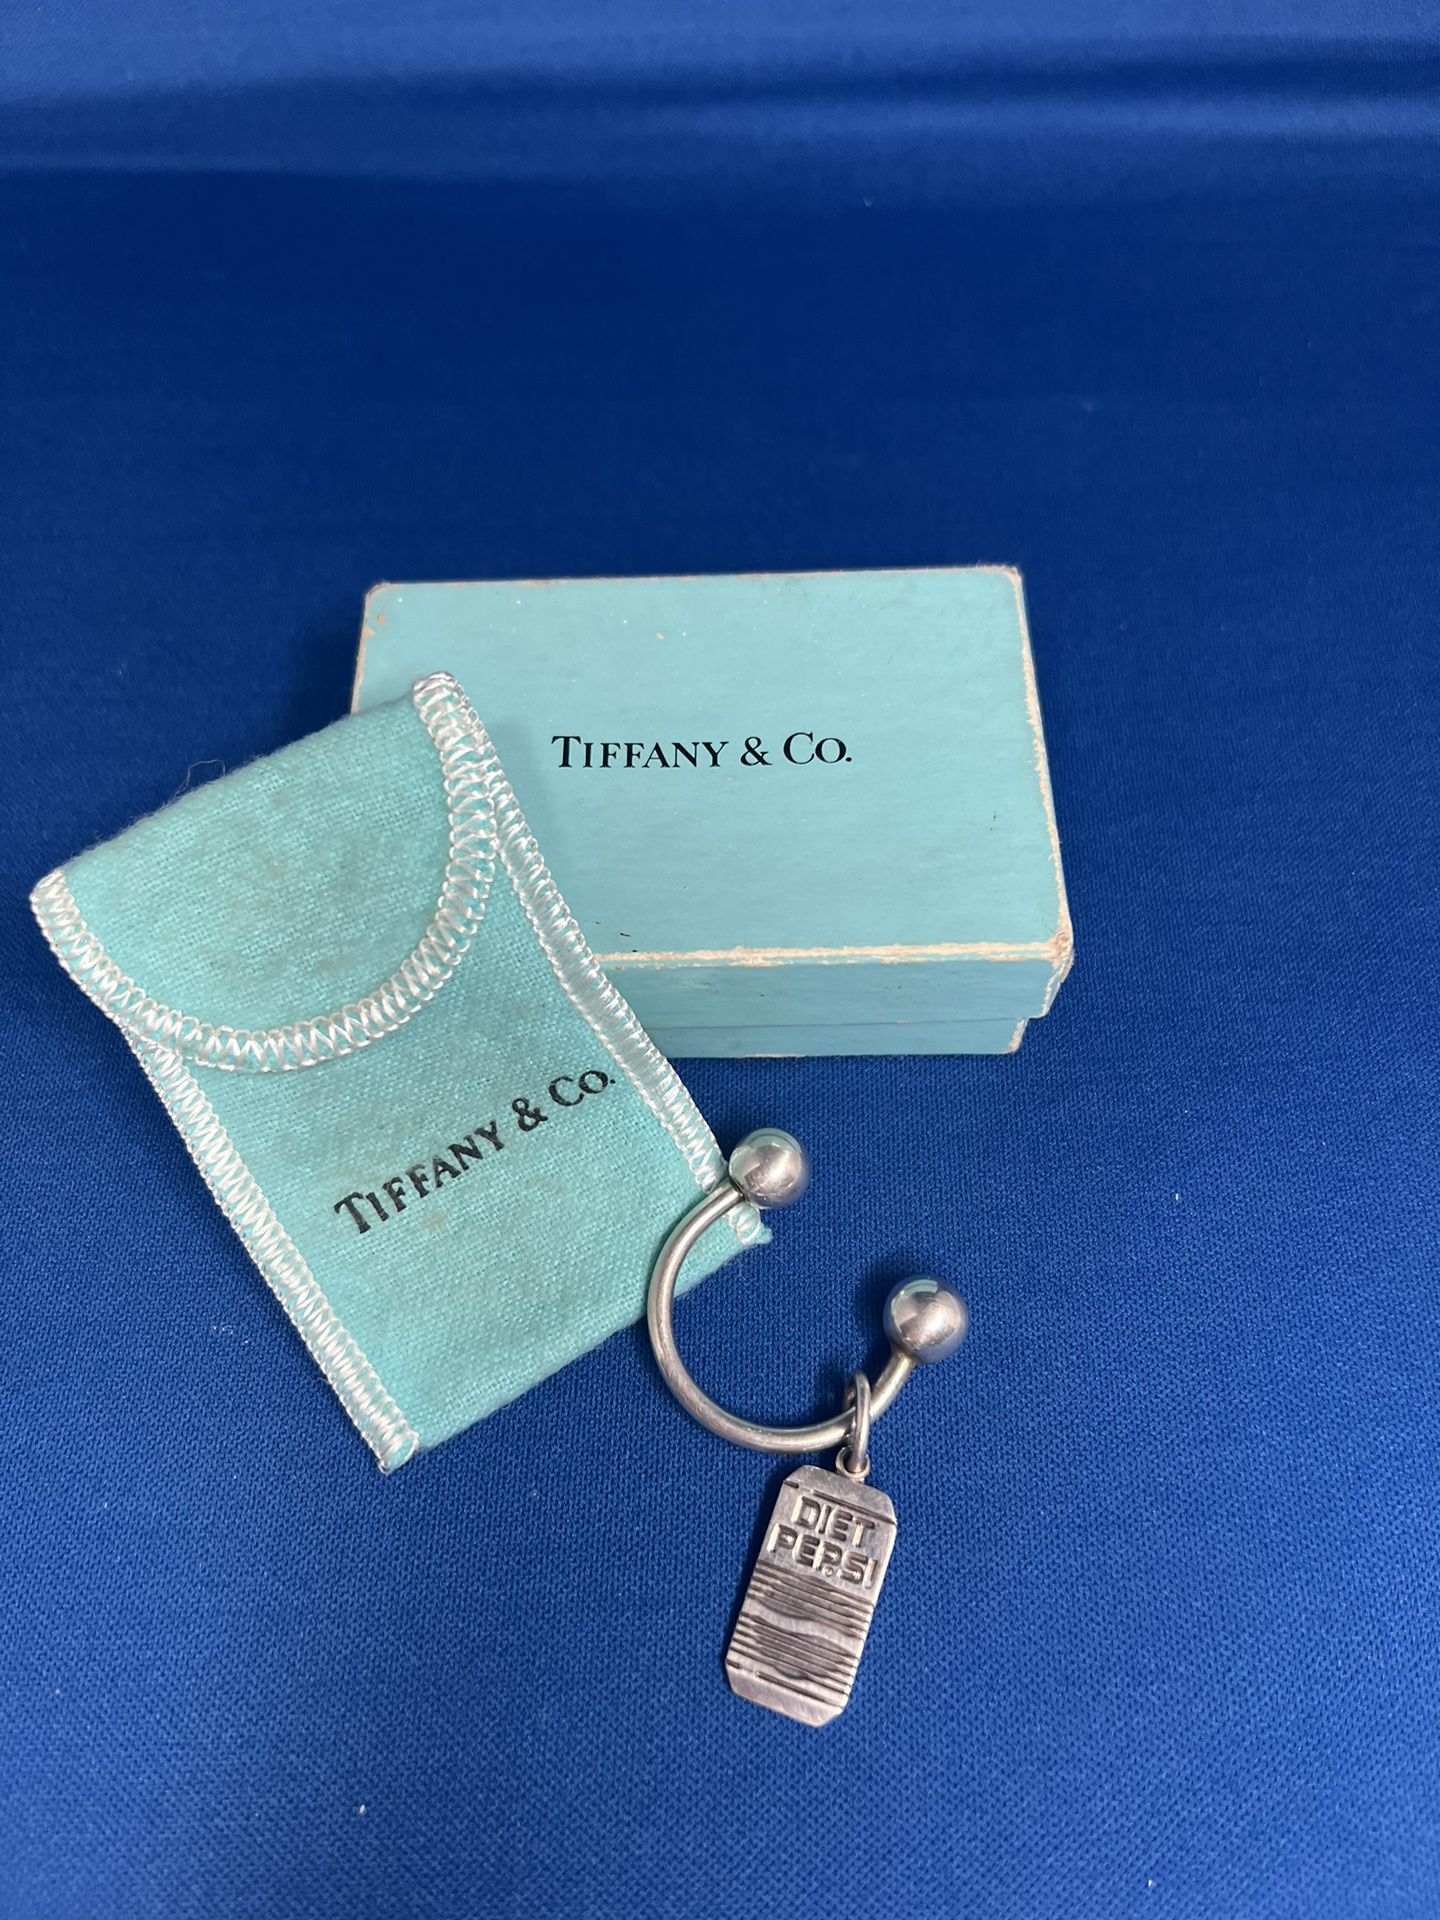 Tiffany & Co Diet Pepsi Key Ring